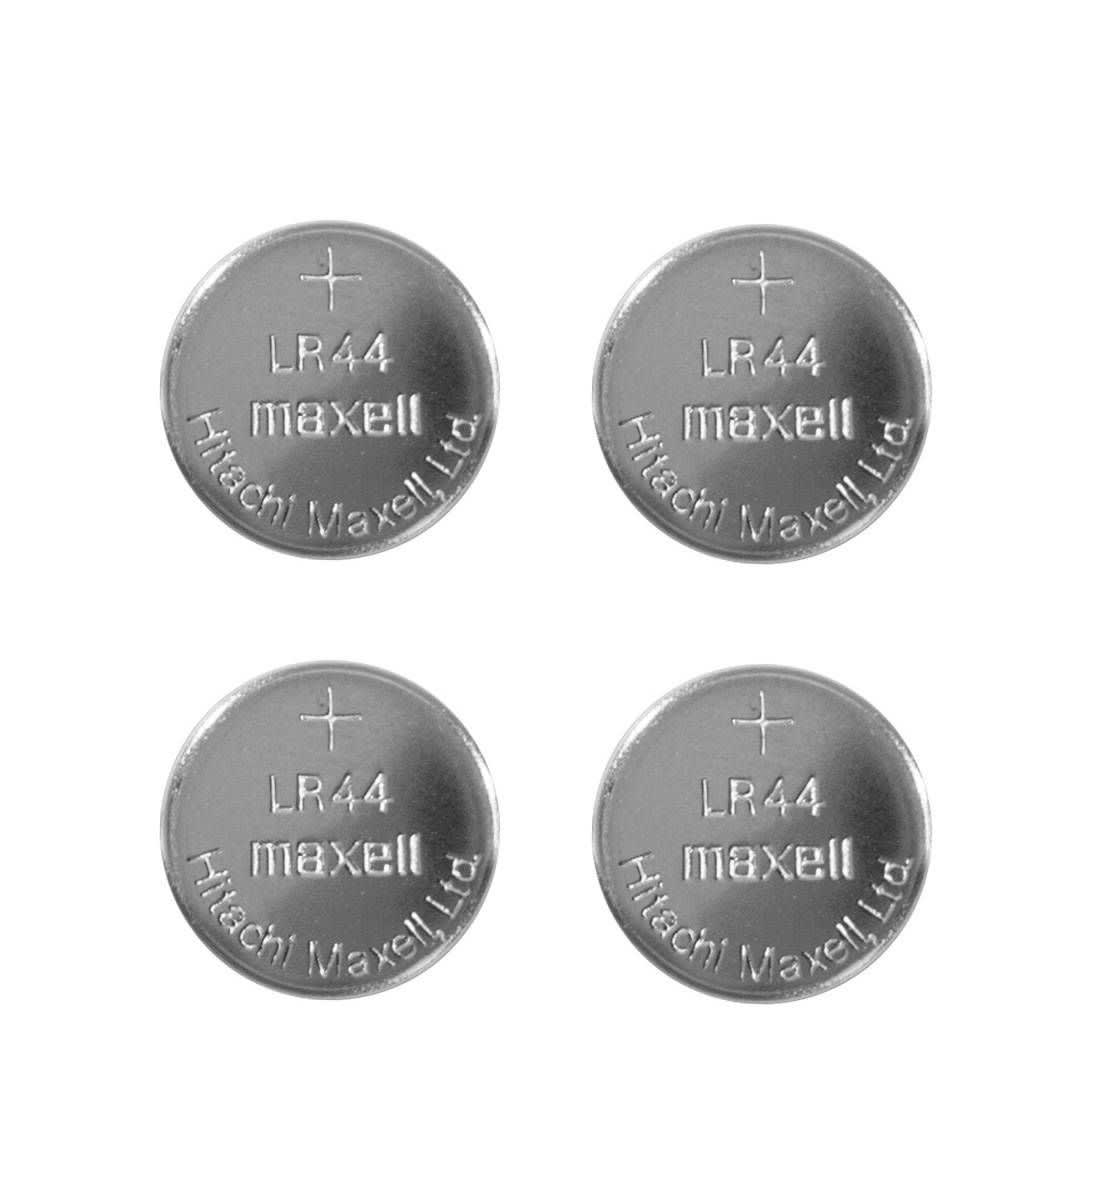 Blister(s) x 2 Pile bouton alcaline blister LR1130-LR54-AG10 NX - 0% Hg  1.5V 75m Enix